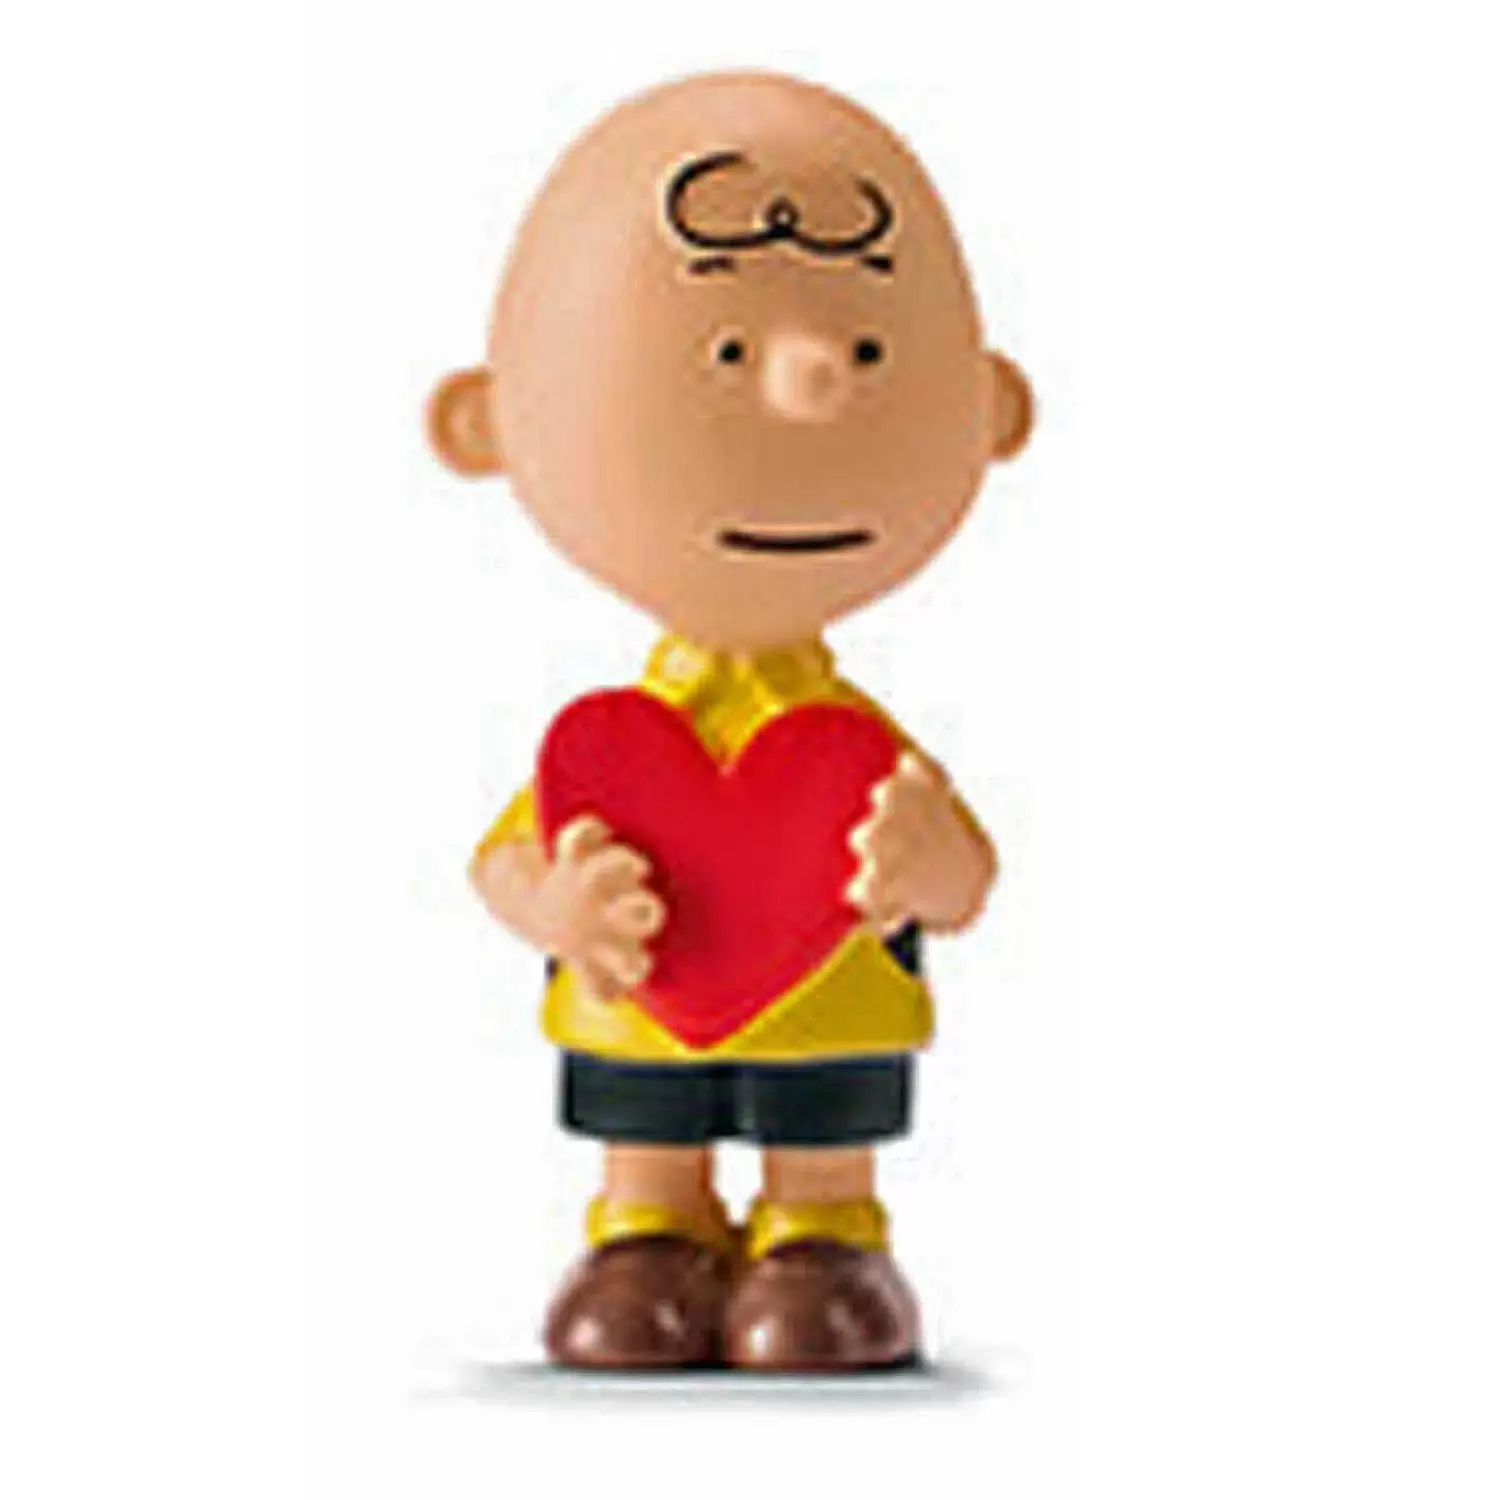 Peanuts - Charlie Brown tenant un coeur